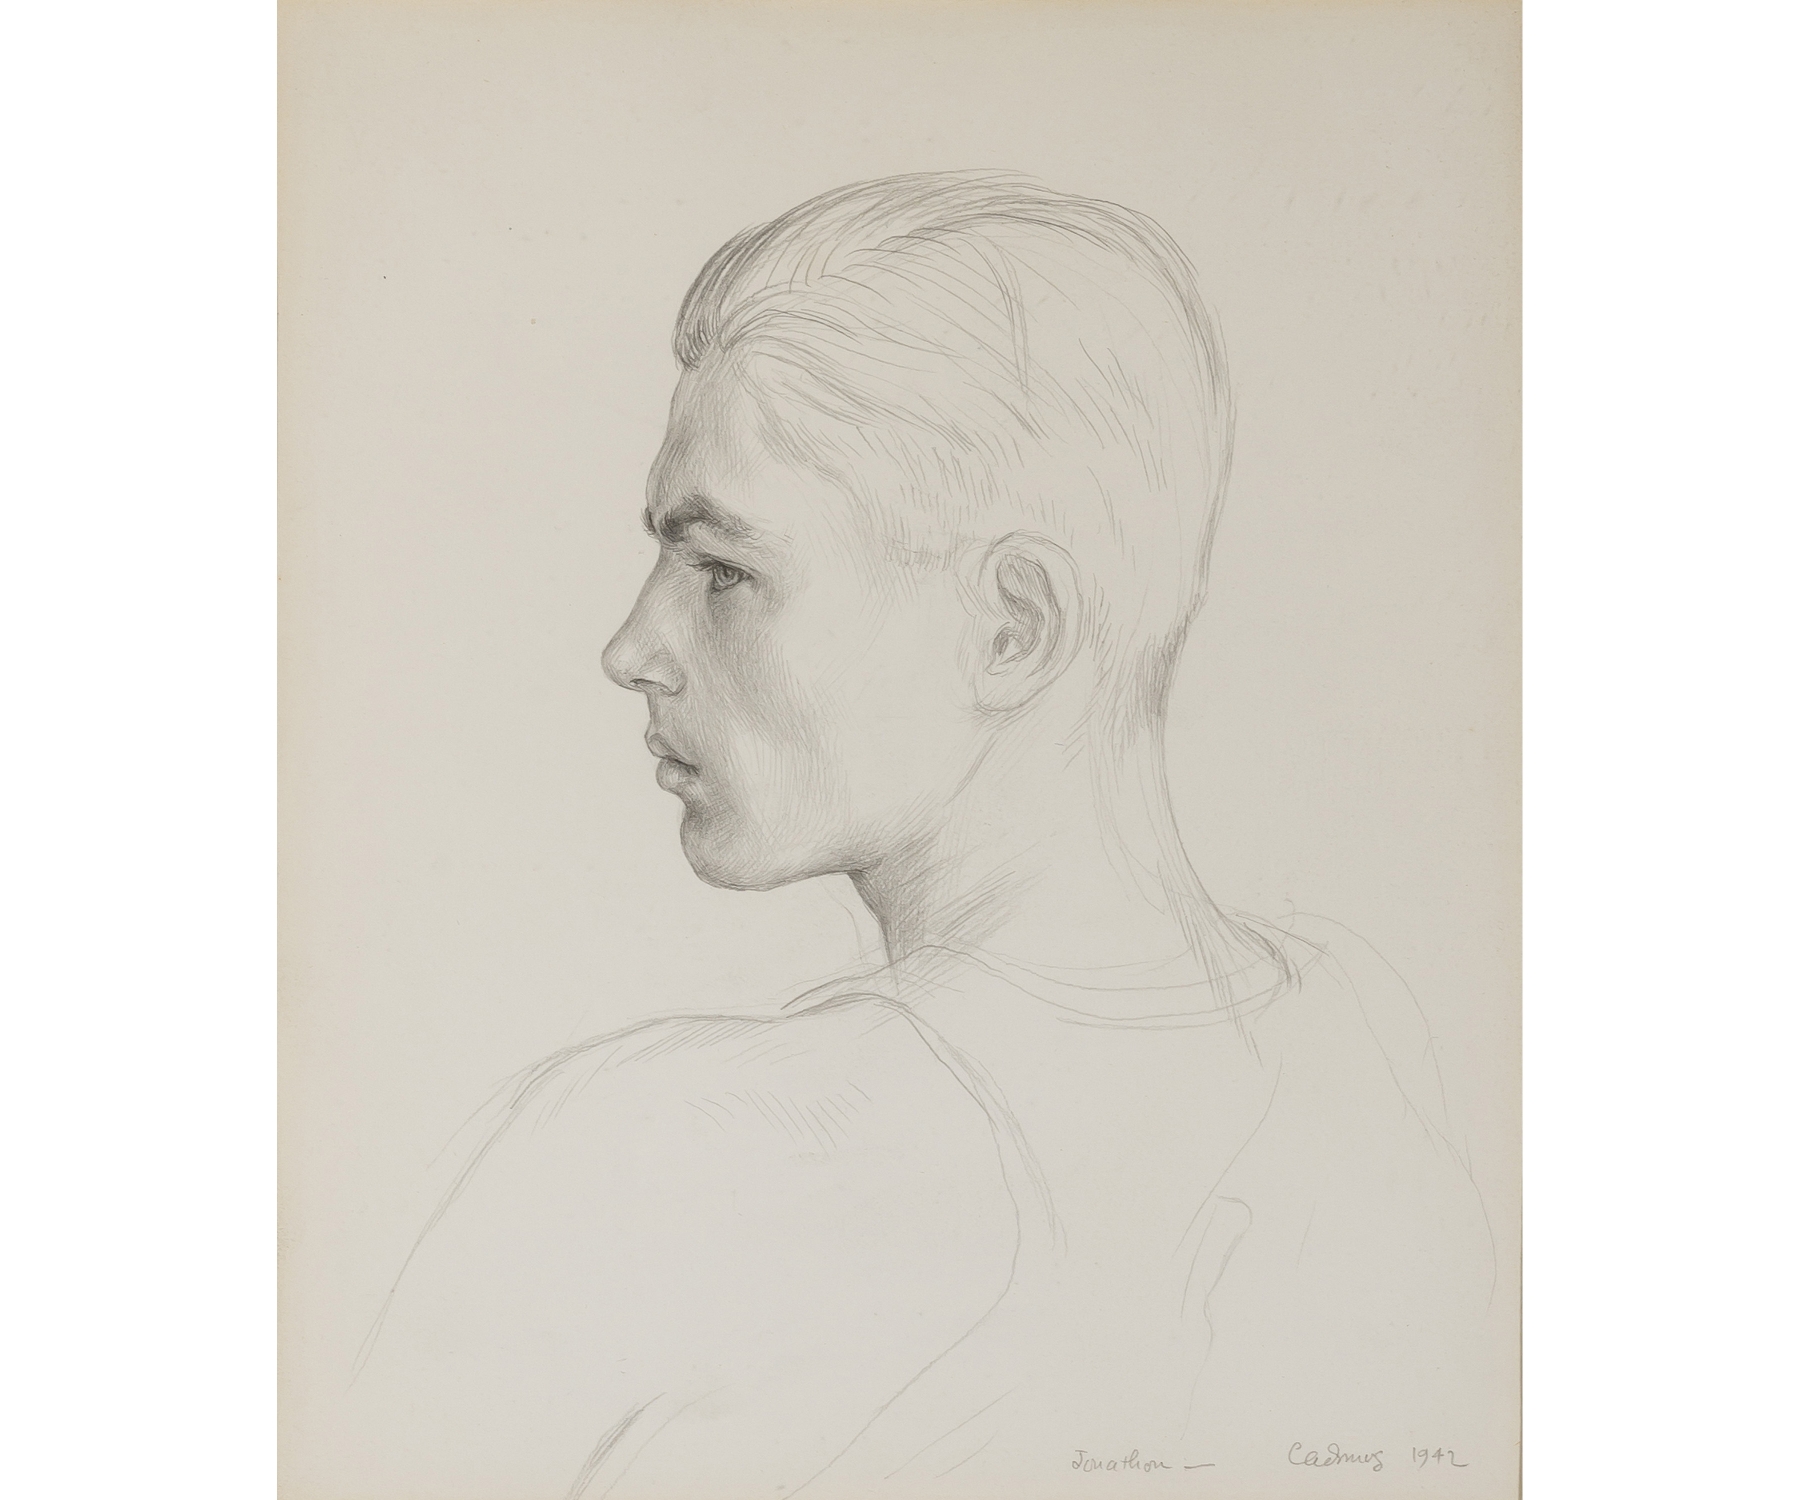 &quot;Jonathan (Portrait of Jonathan Tichenor)&quot;, 1942
Pencil on paper
12 x 9 inches (31 x 23 cm)
CADZ 82